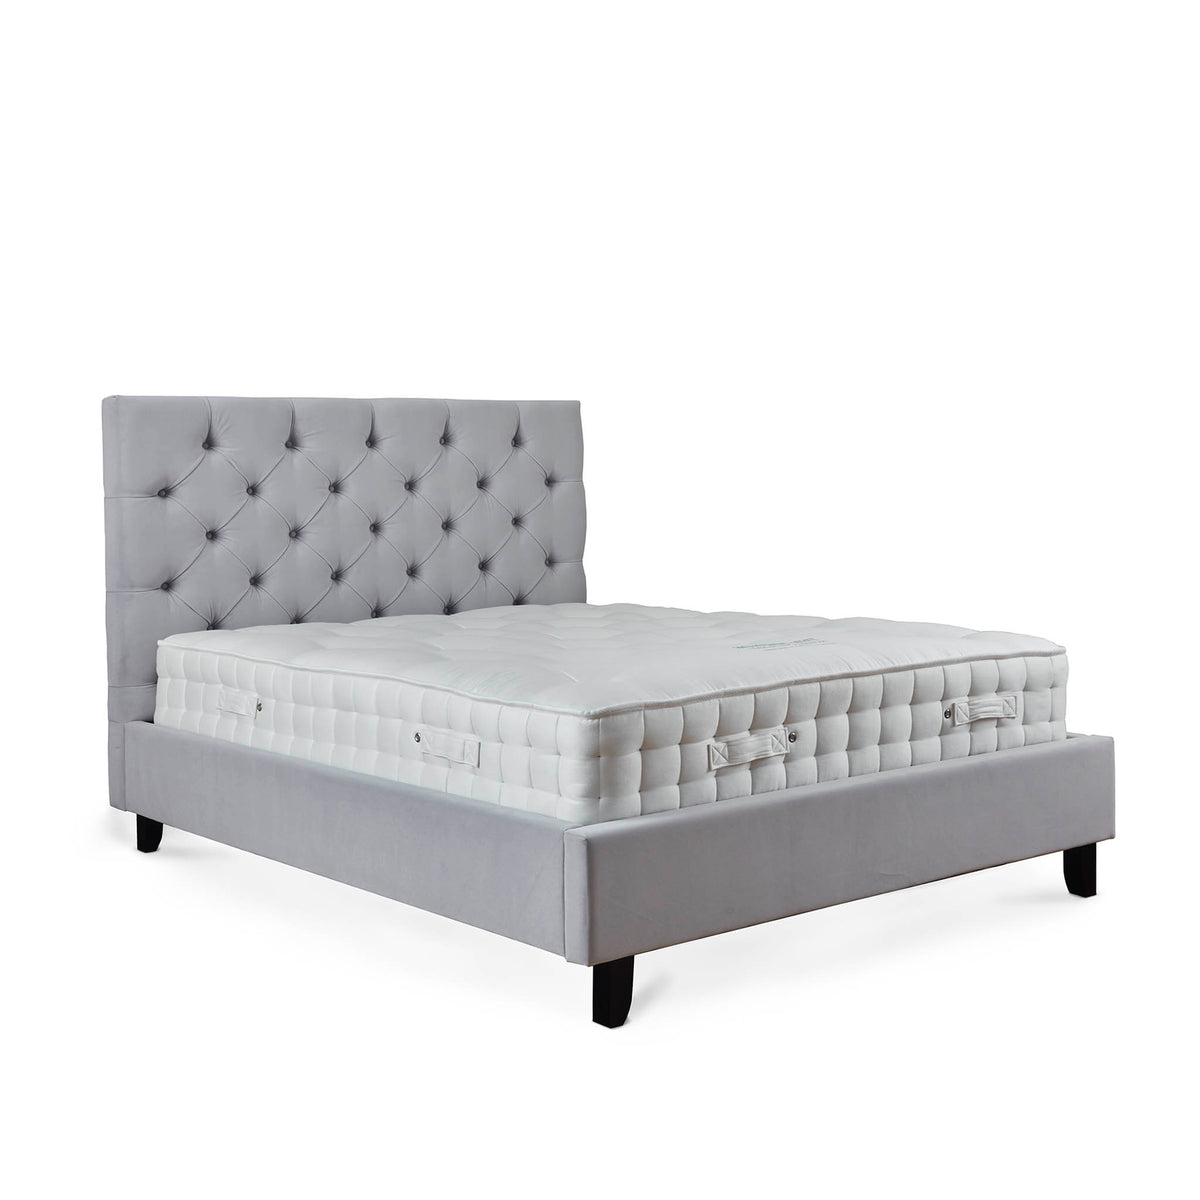 Finley Silver Mink Velvet Upholstered Bed Frame with mattress